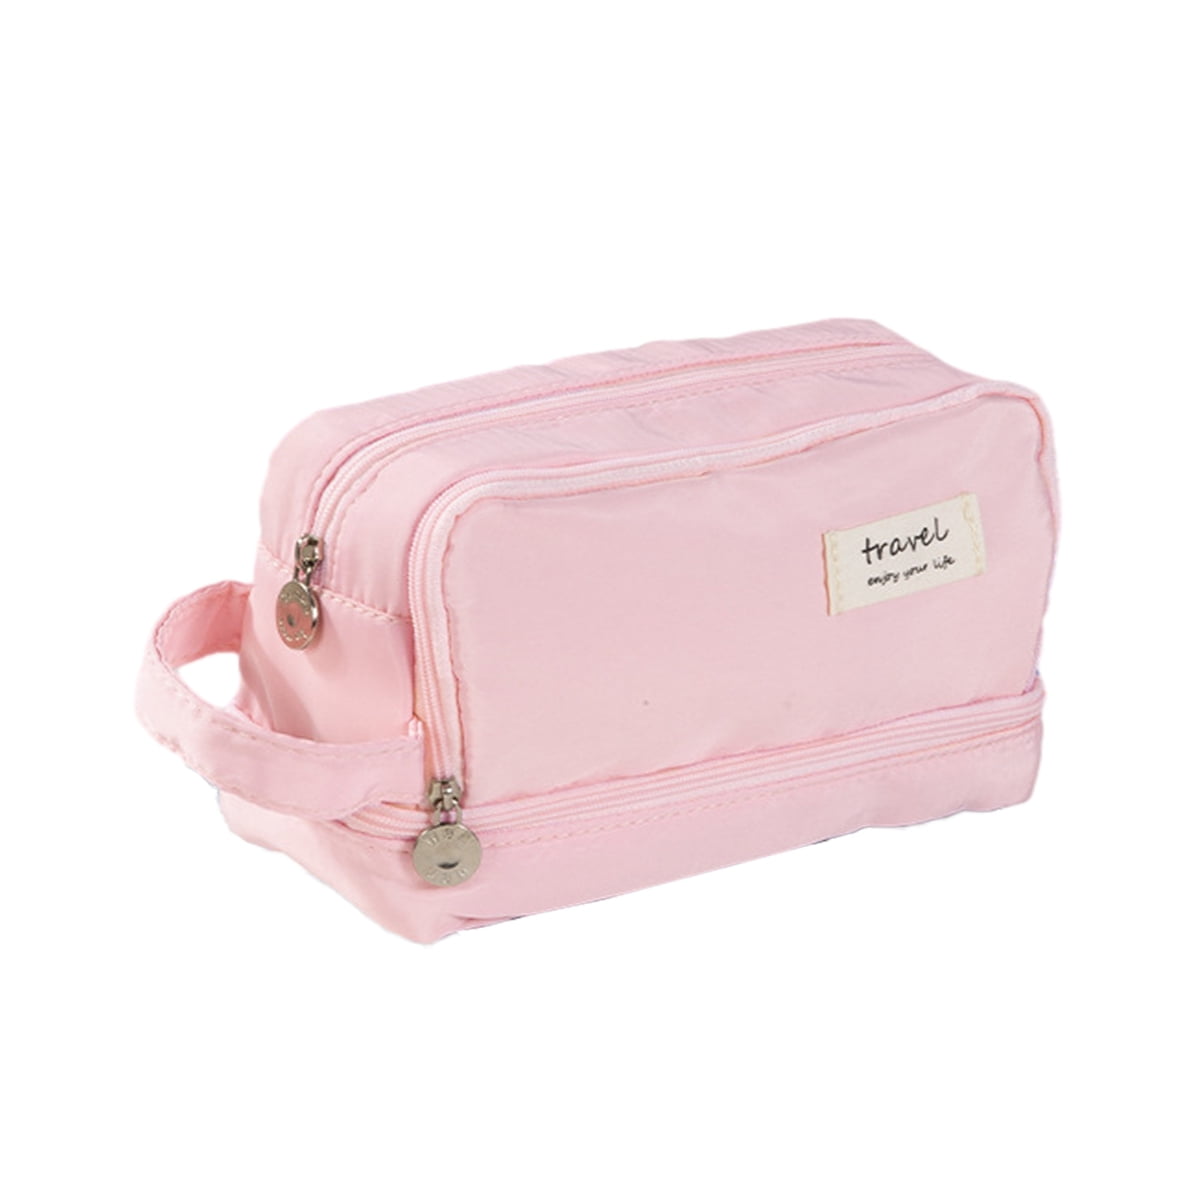 Pink Sherbet Pastel Rectangular Pencil Case by Premto – Evercarts